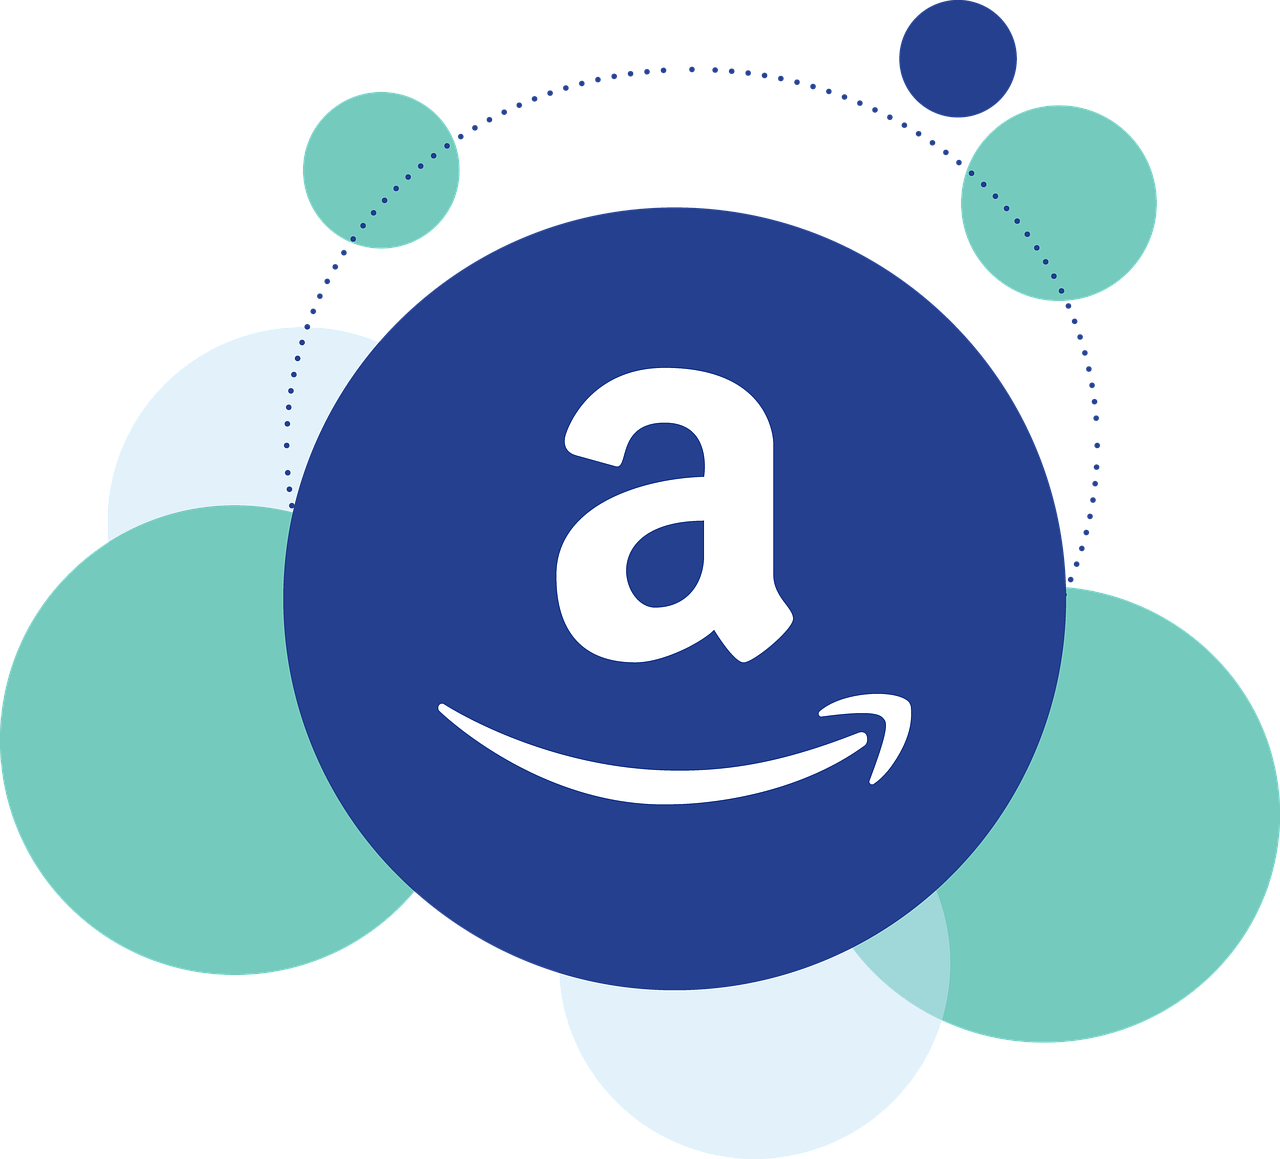 European Commission opens an antitrust investigation into Amazon